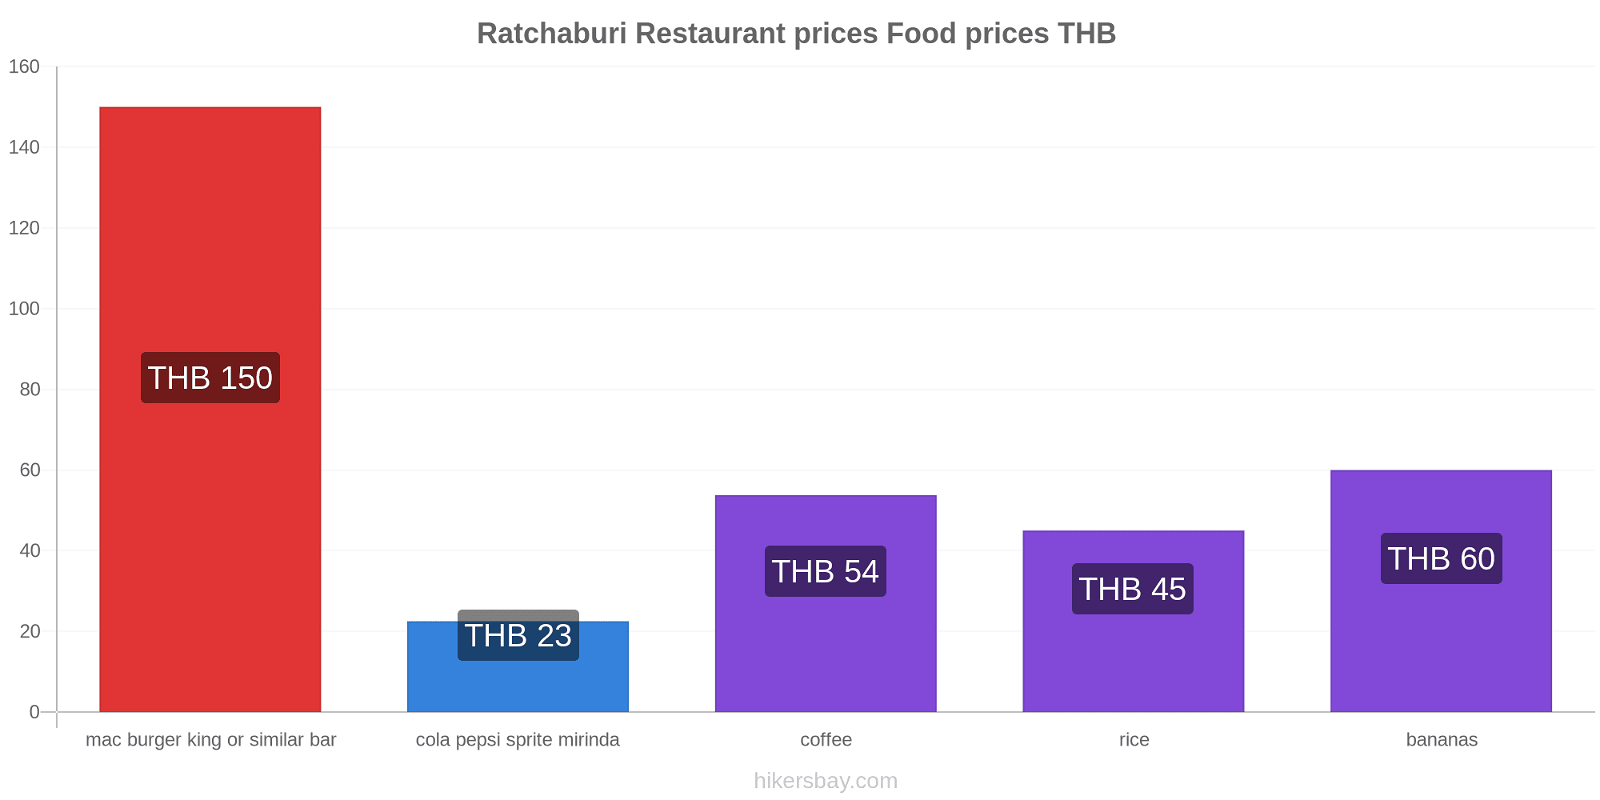 Ratchaburi price changes hikersbay.com